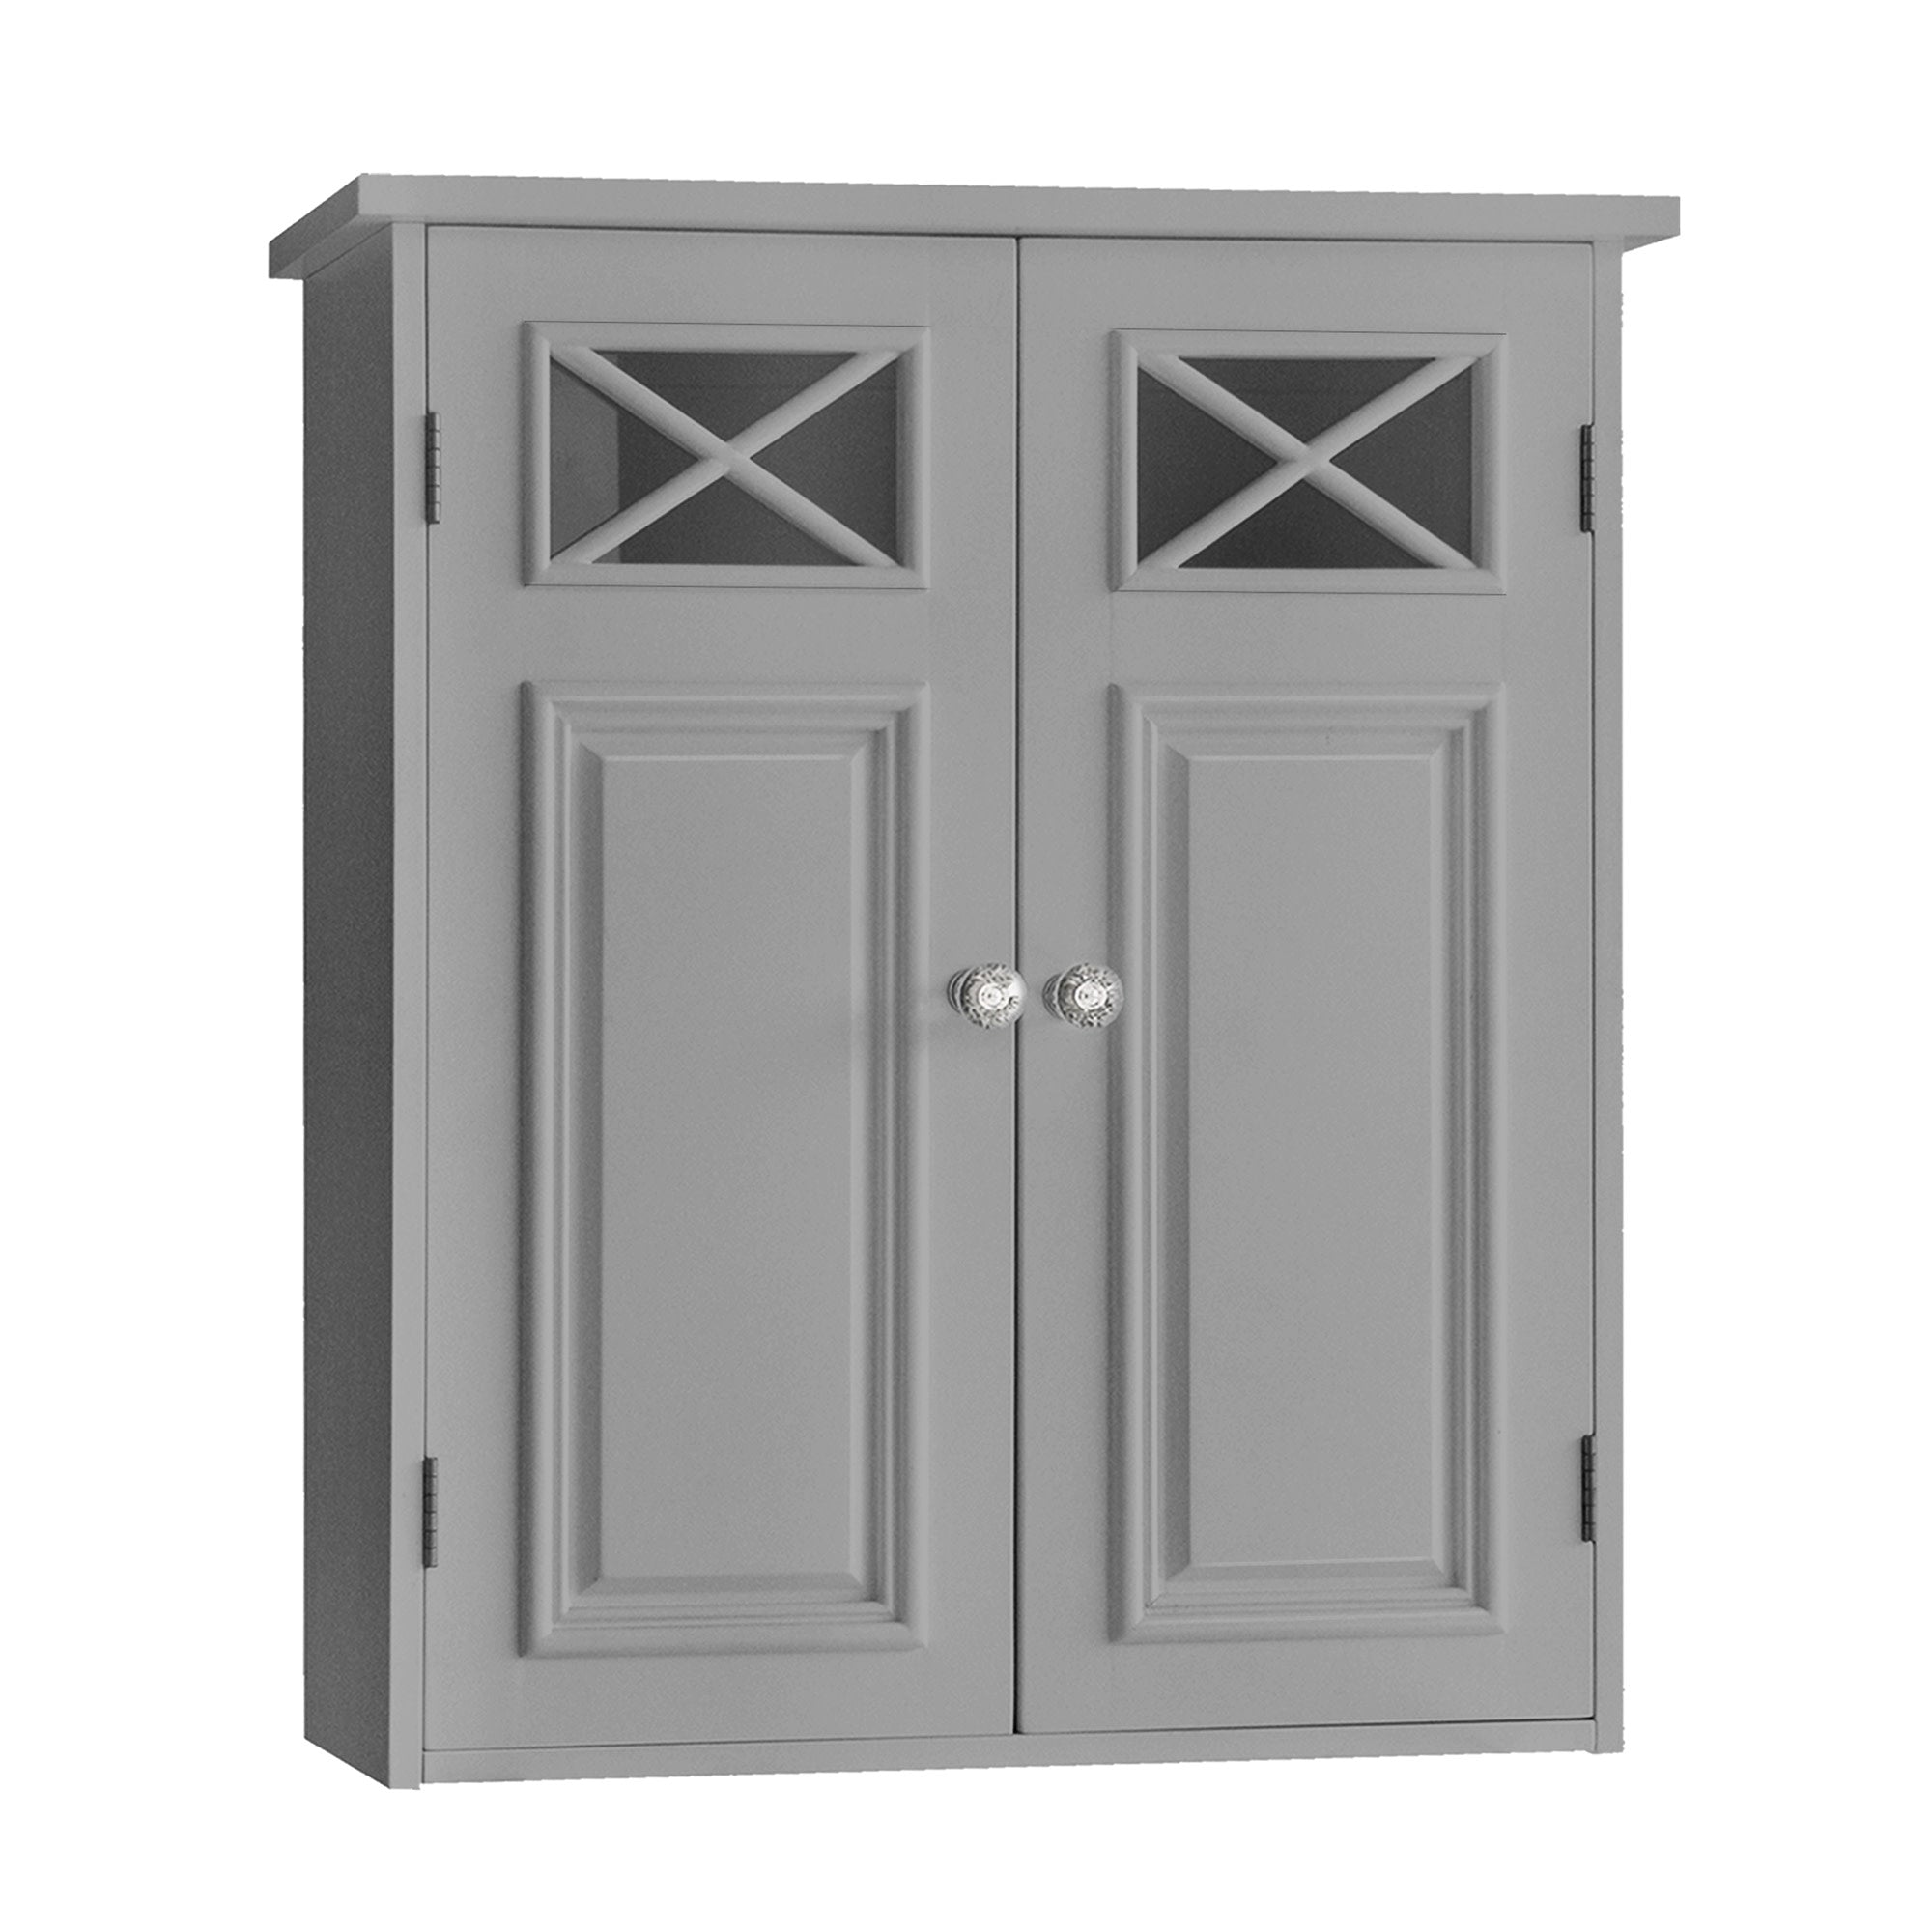 Teamson Home Dawson Contemporary Removable Wooden Cabinet, Gray